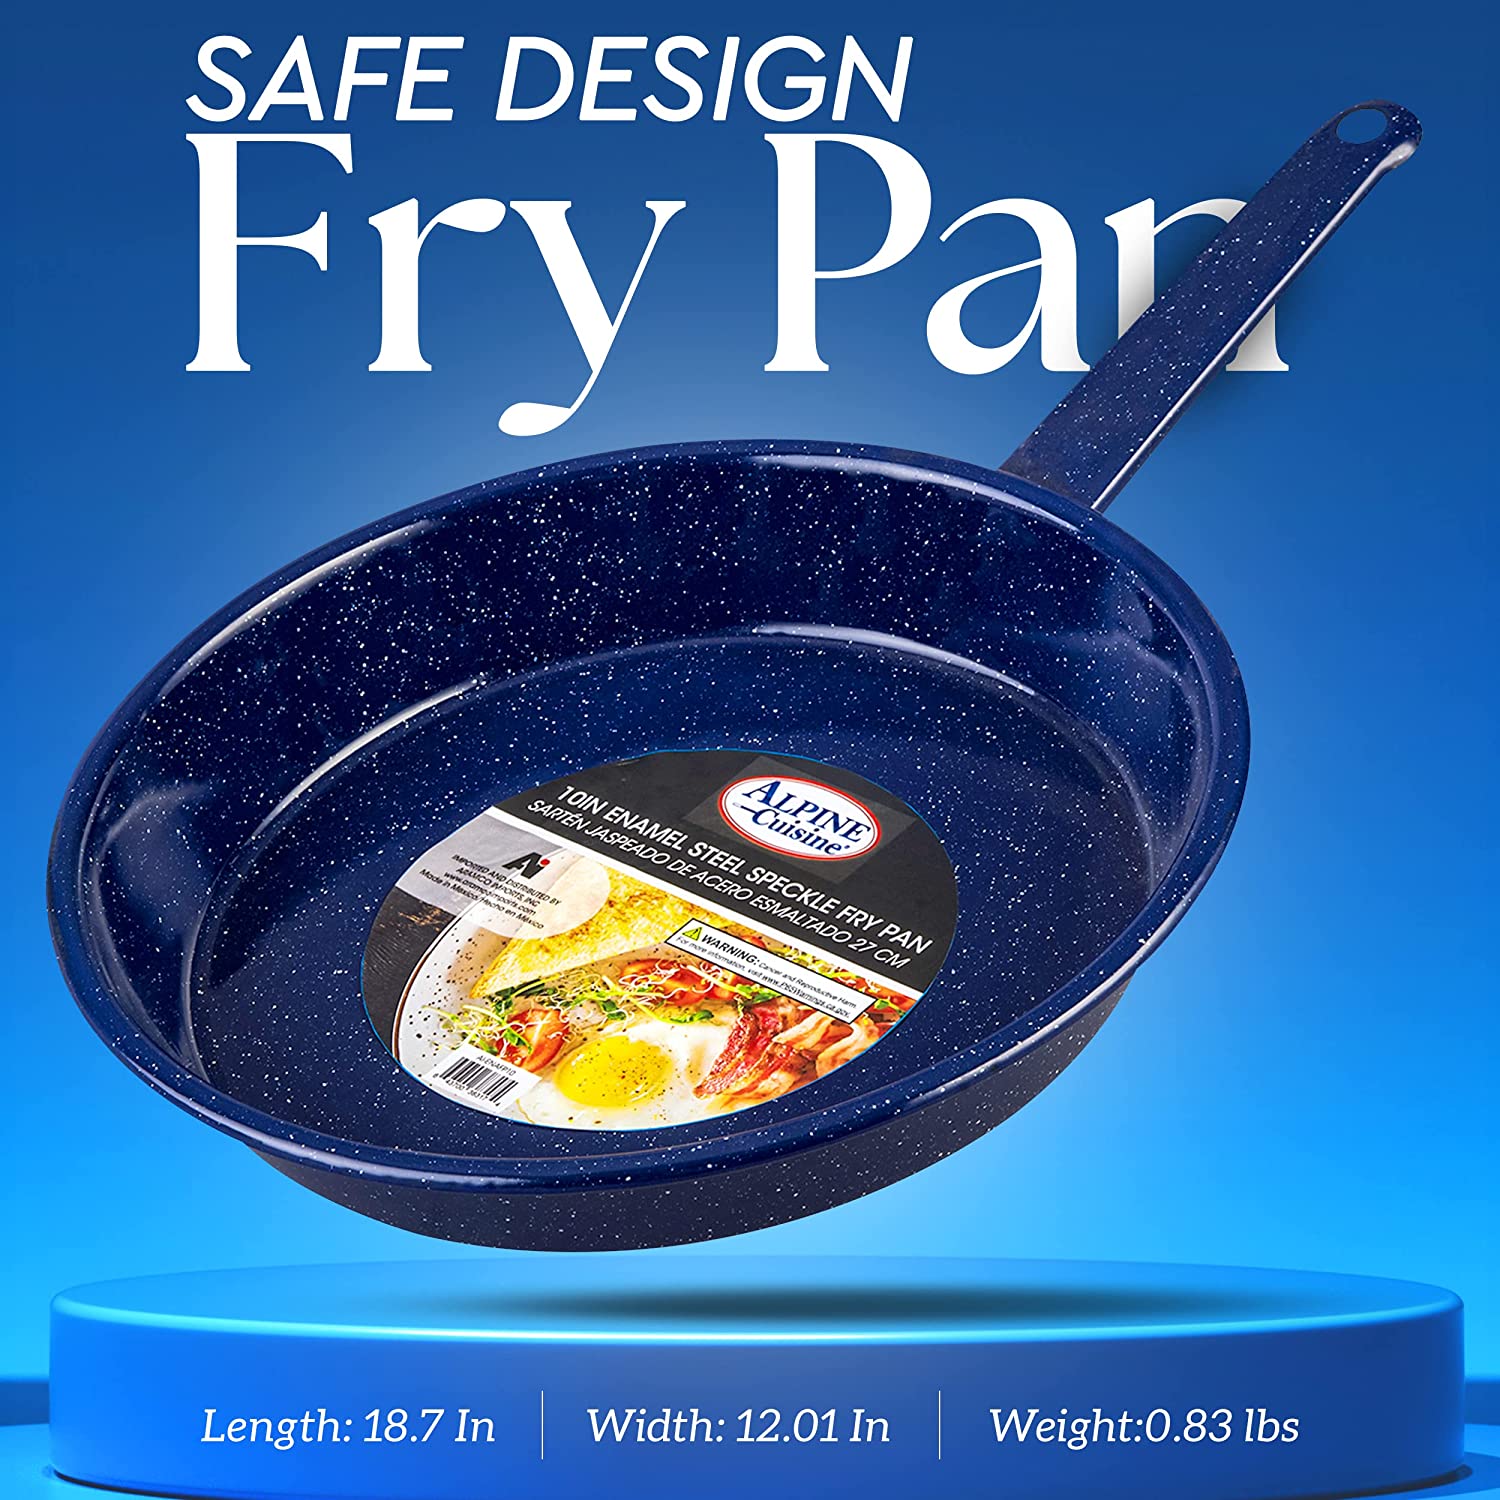 Alpine Cuisine Frypan 10-Inch - Black Cast Iron Fry Pan with Soft Touc